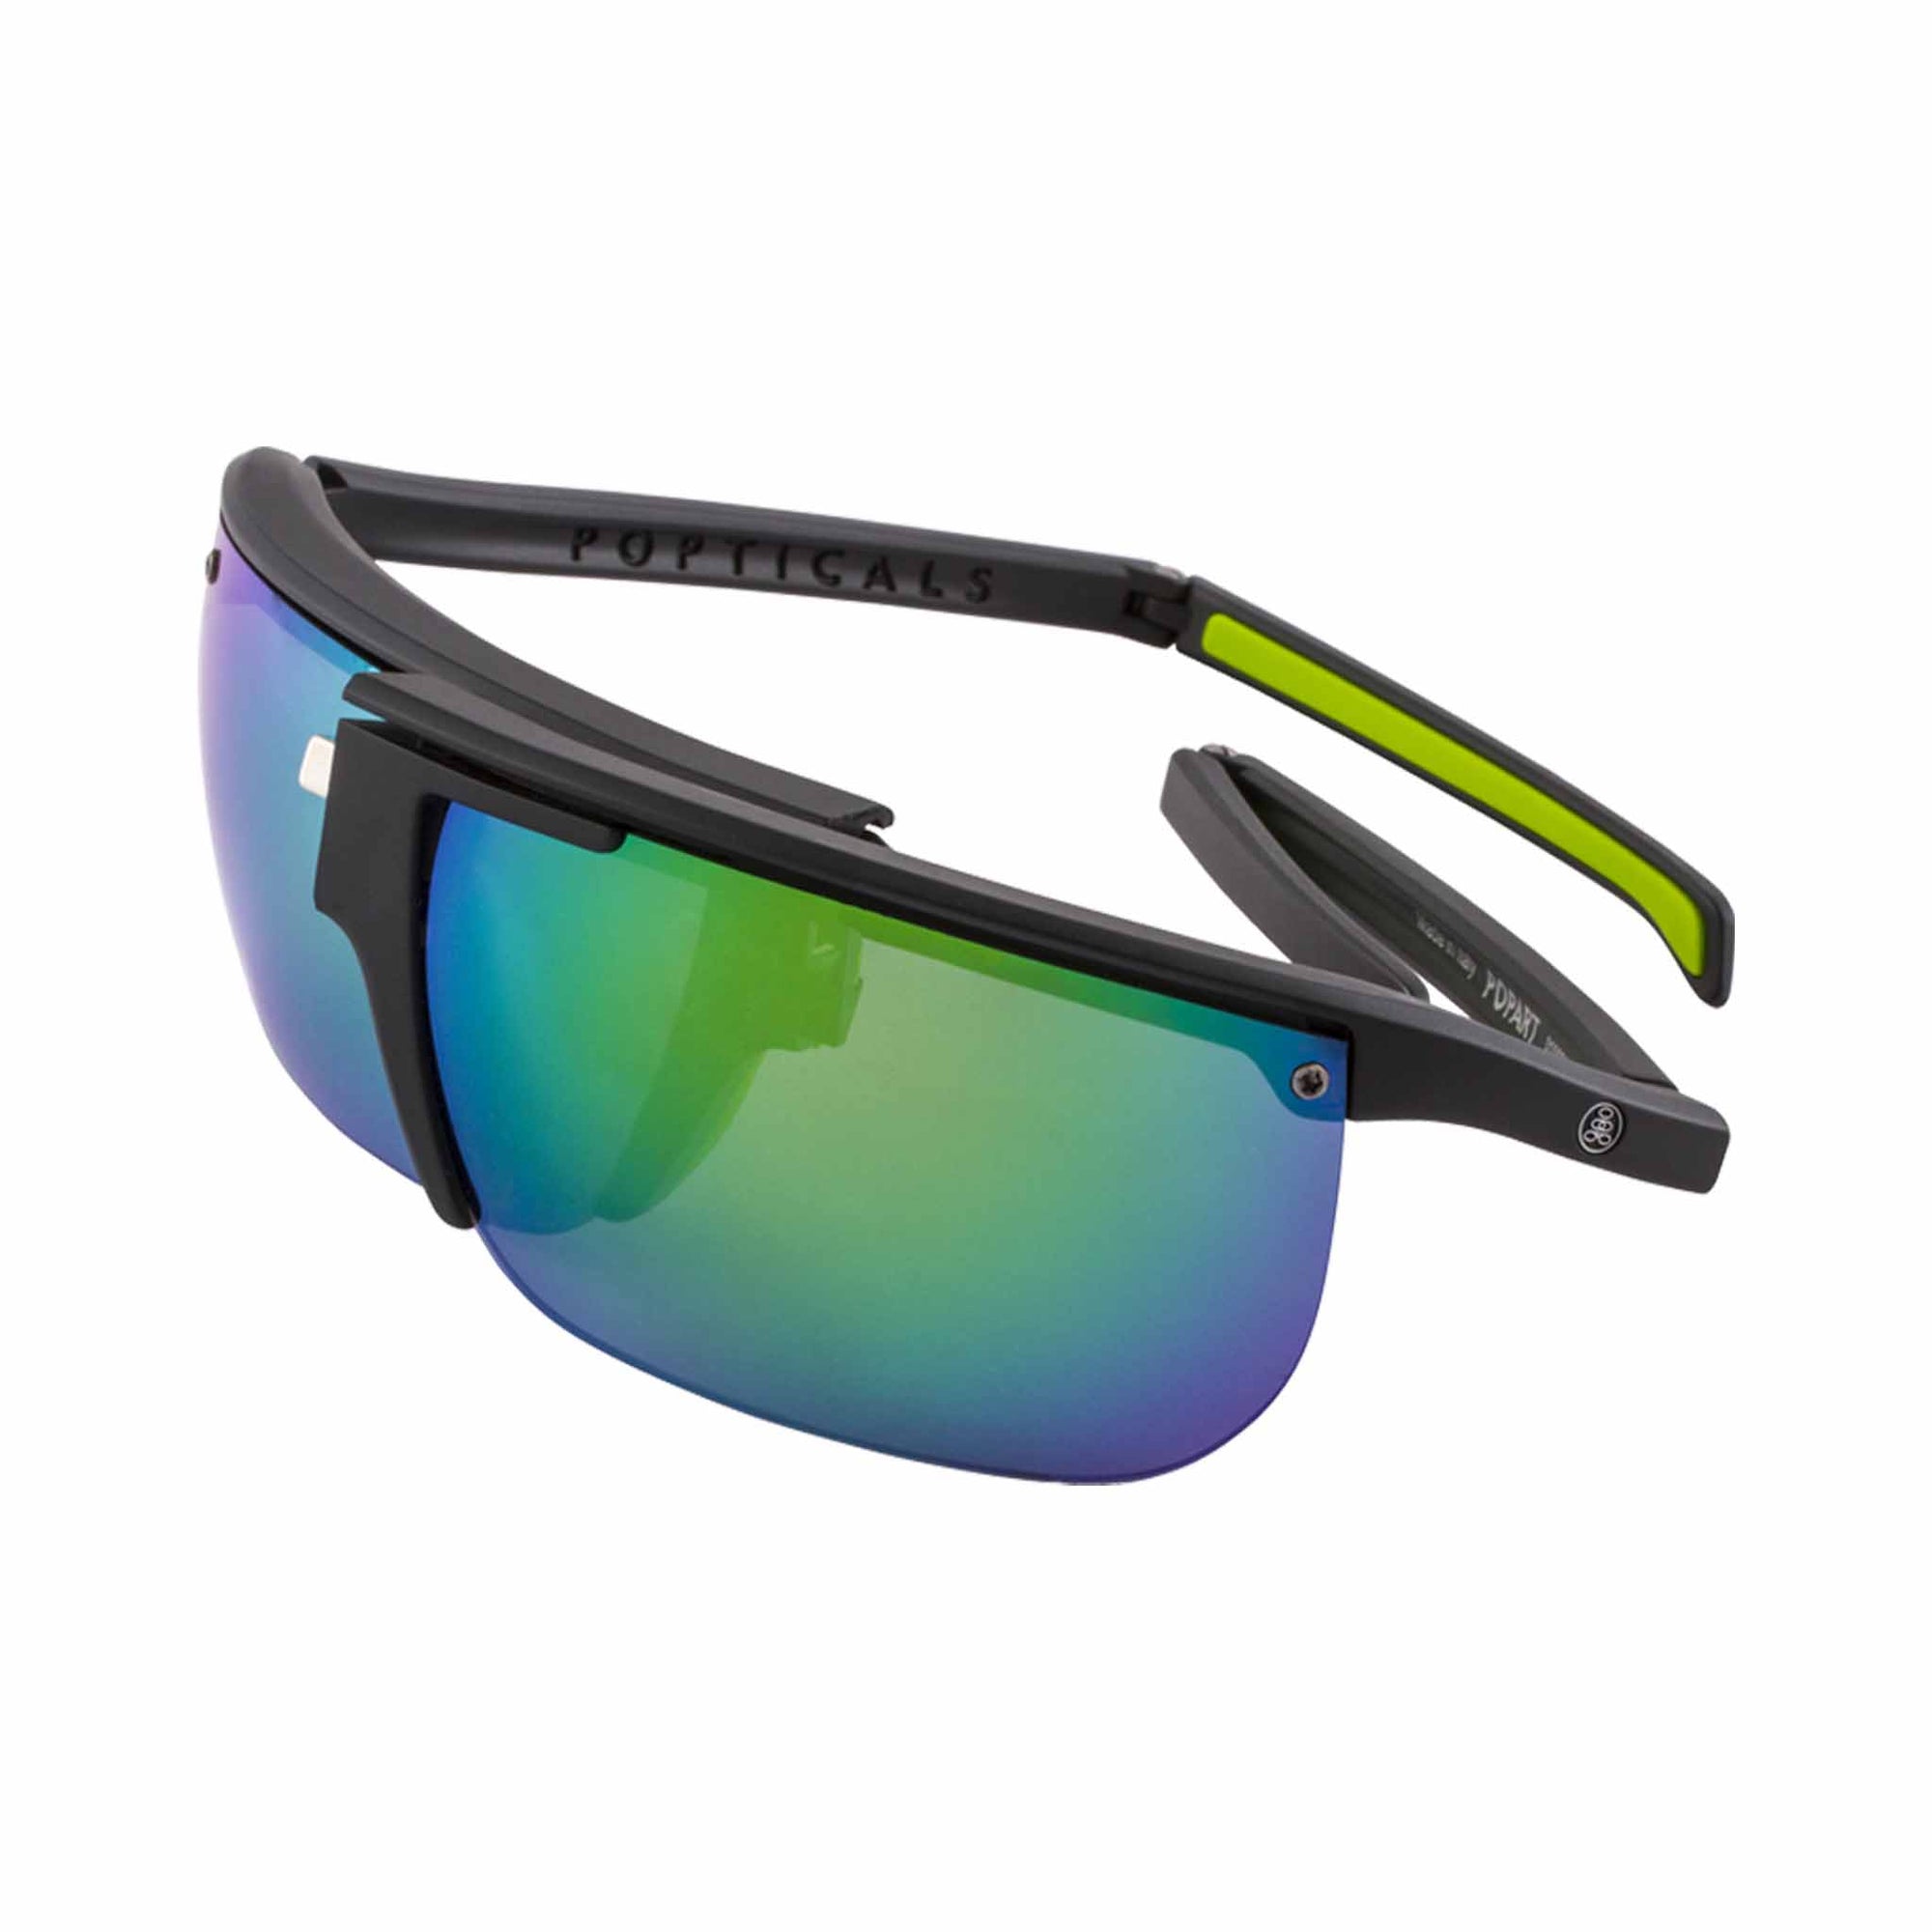 Popticals, Premium Compact Sunglasses, PopArt, 010030-BMEN, Polarized Sunglasses, Matte Black Frame, Gray Lenses with Green Mirror Finish, Spider View